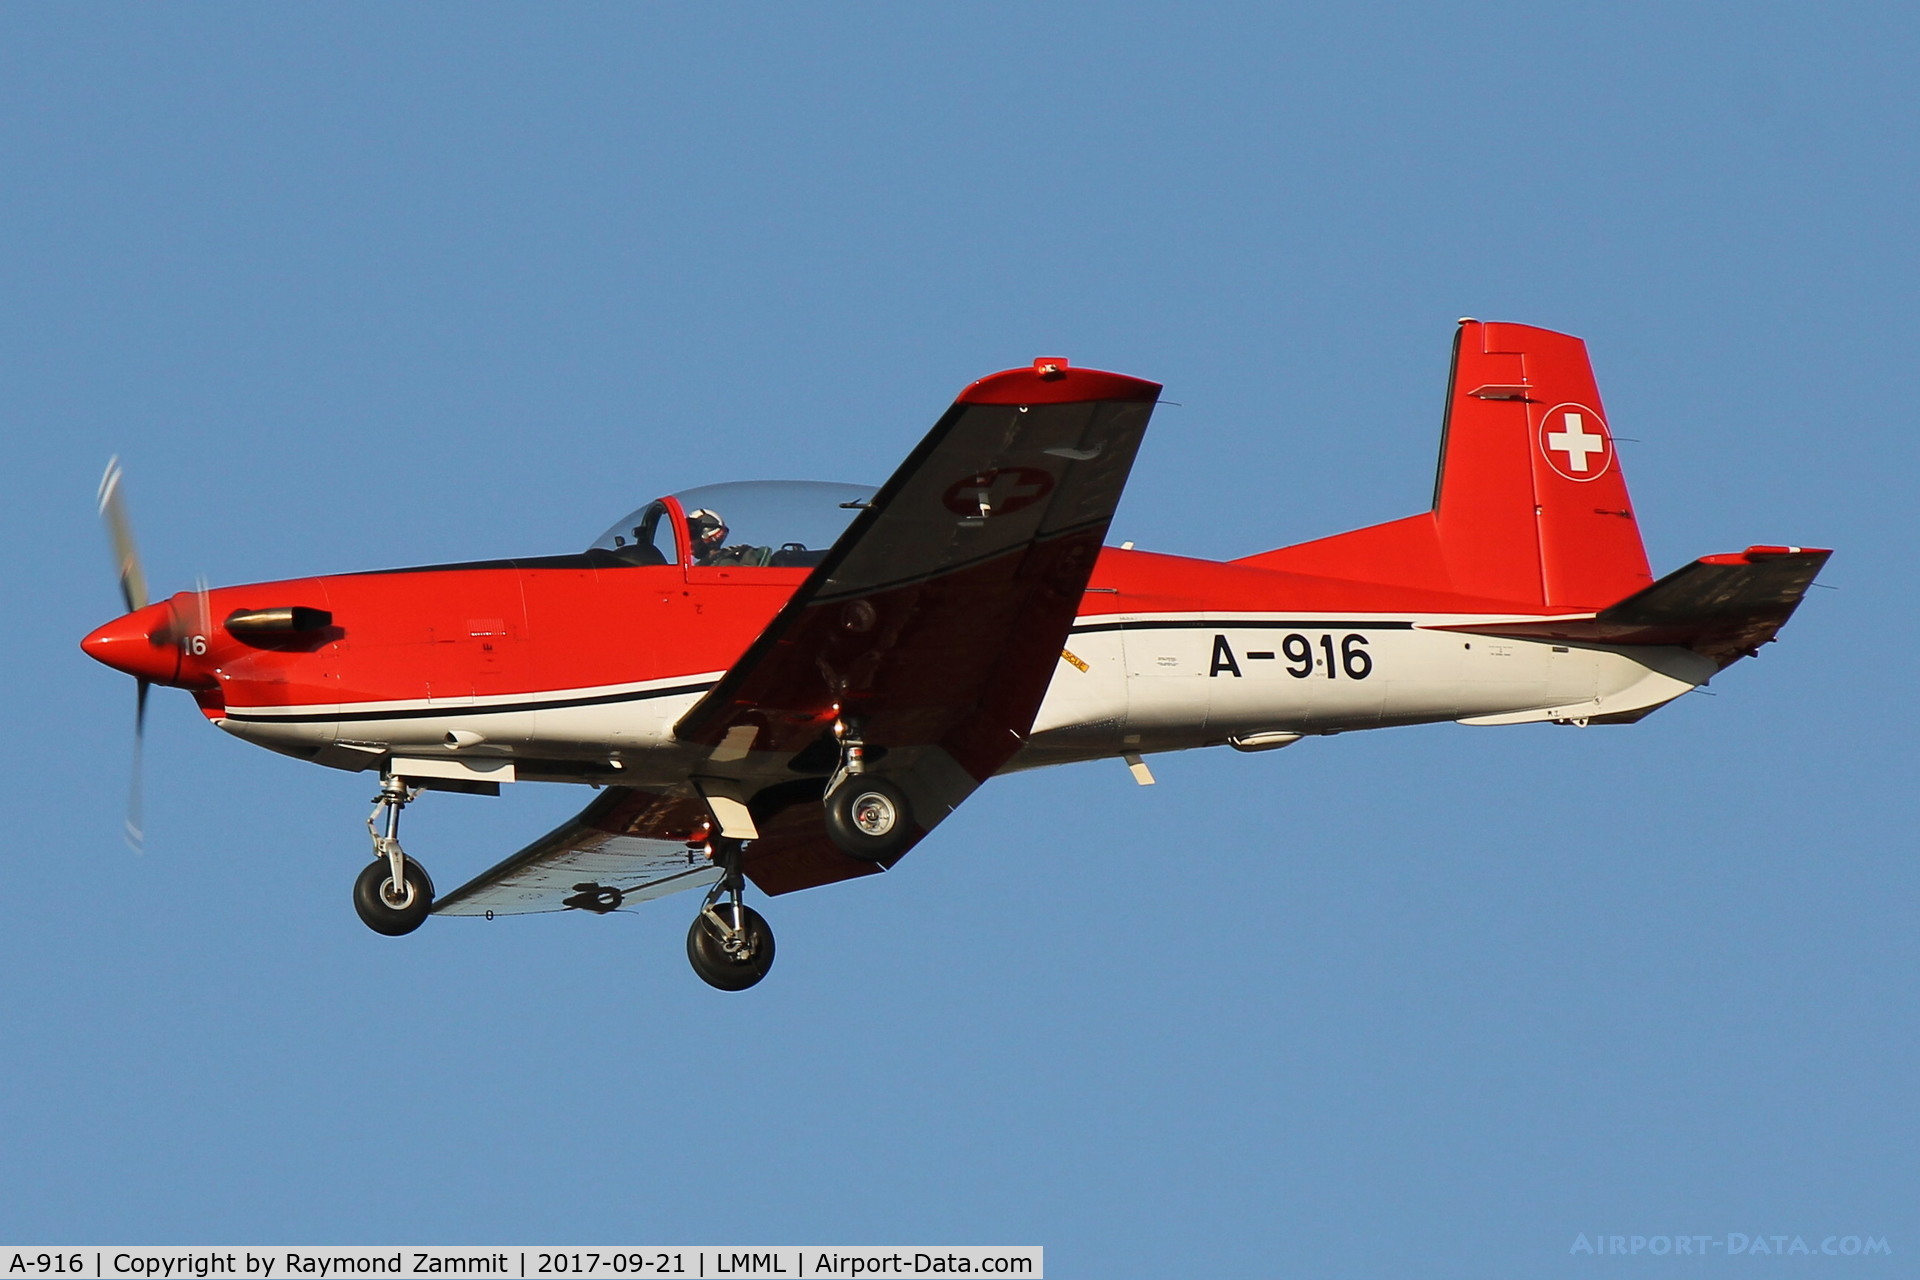 A-916, 1983 Pilatus PC-7 Turbo Trainer C/N 324, Pilatus PC-7 A-916 Swiss Air Force